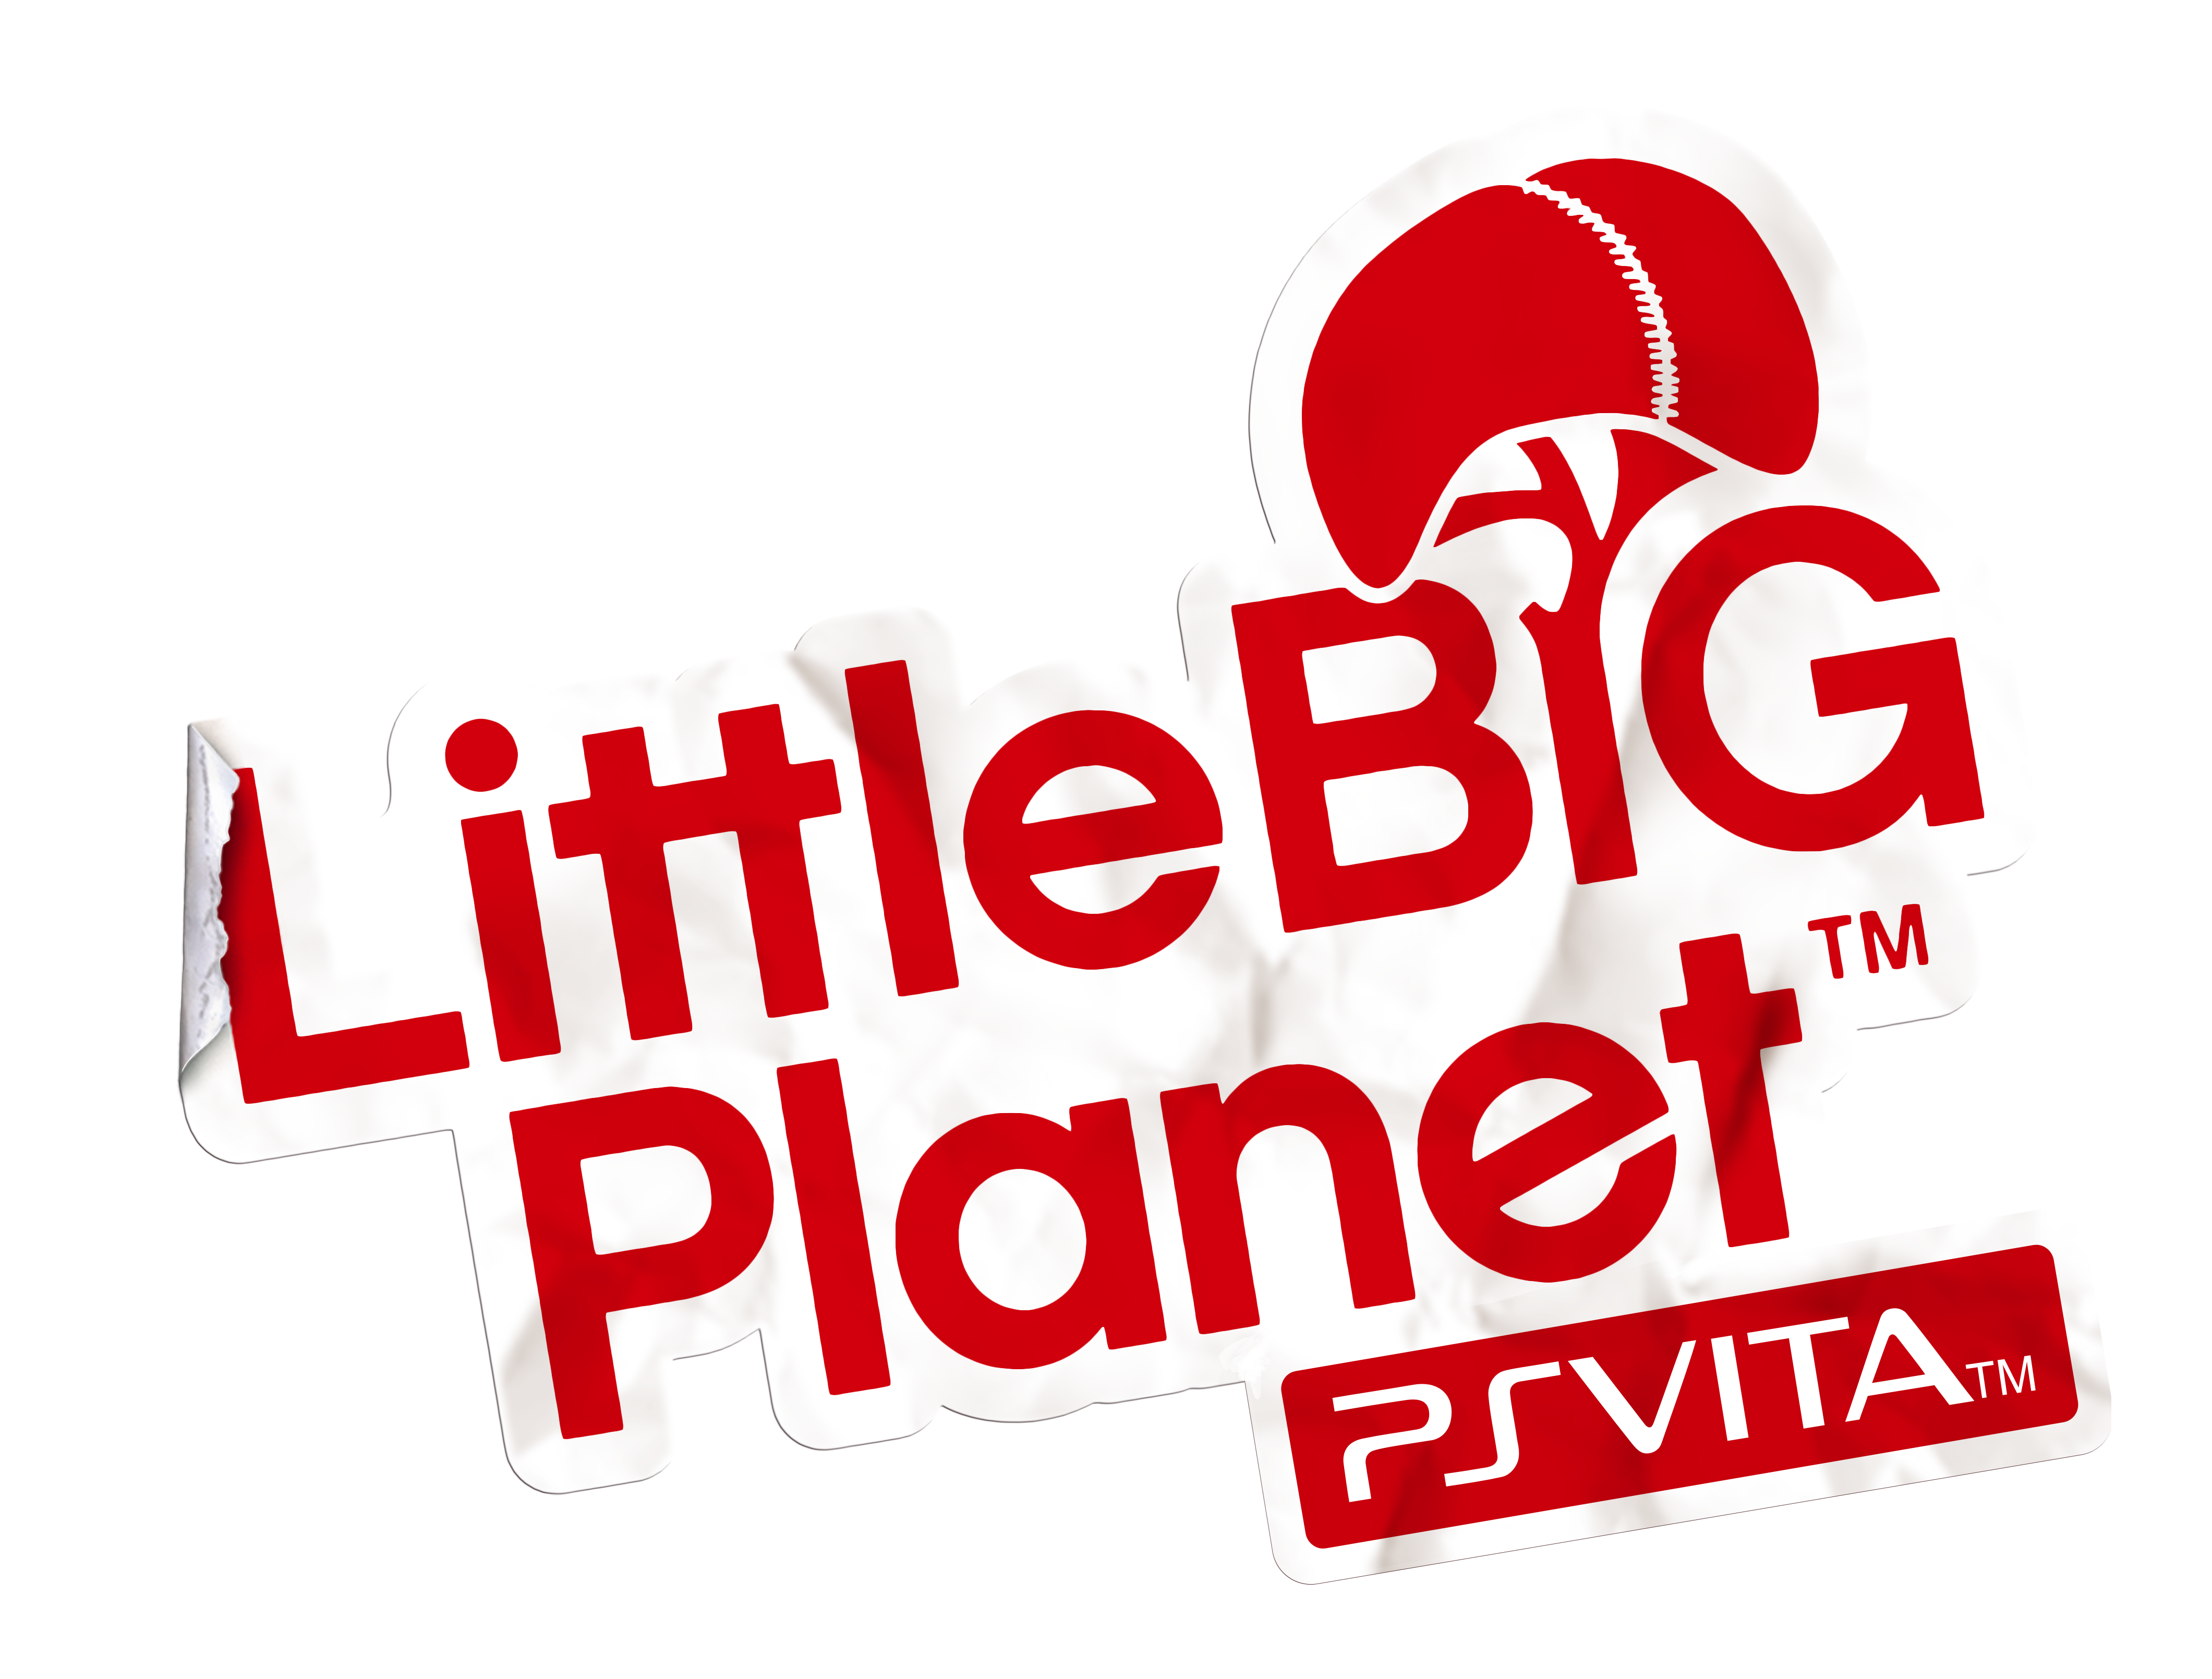 LittleBigPlanet Vita im Test